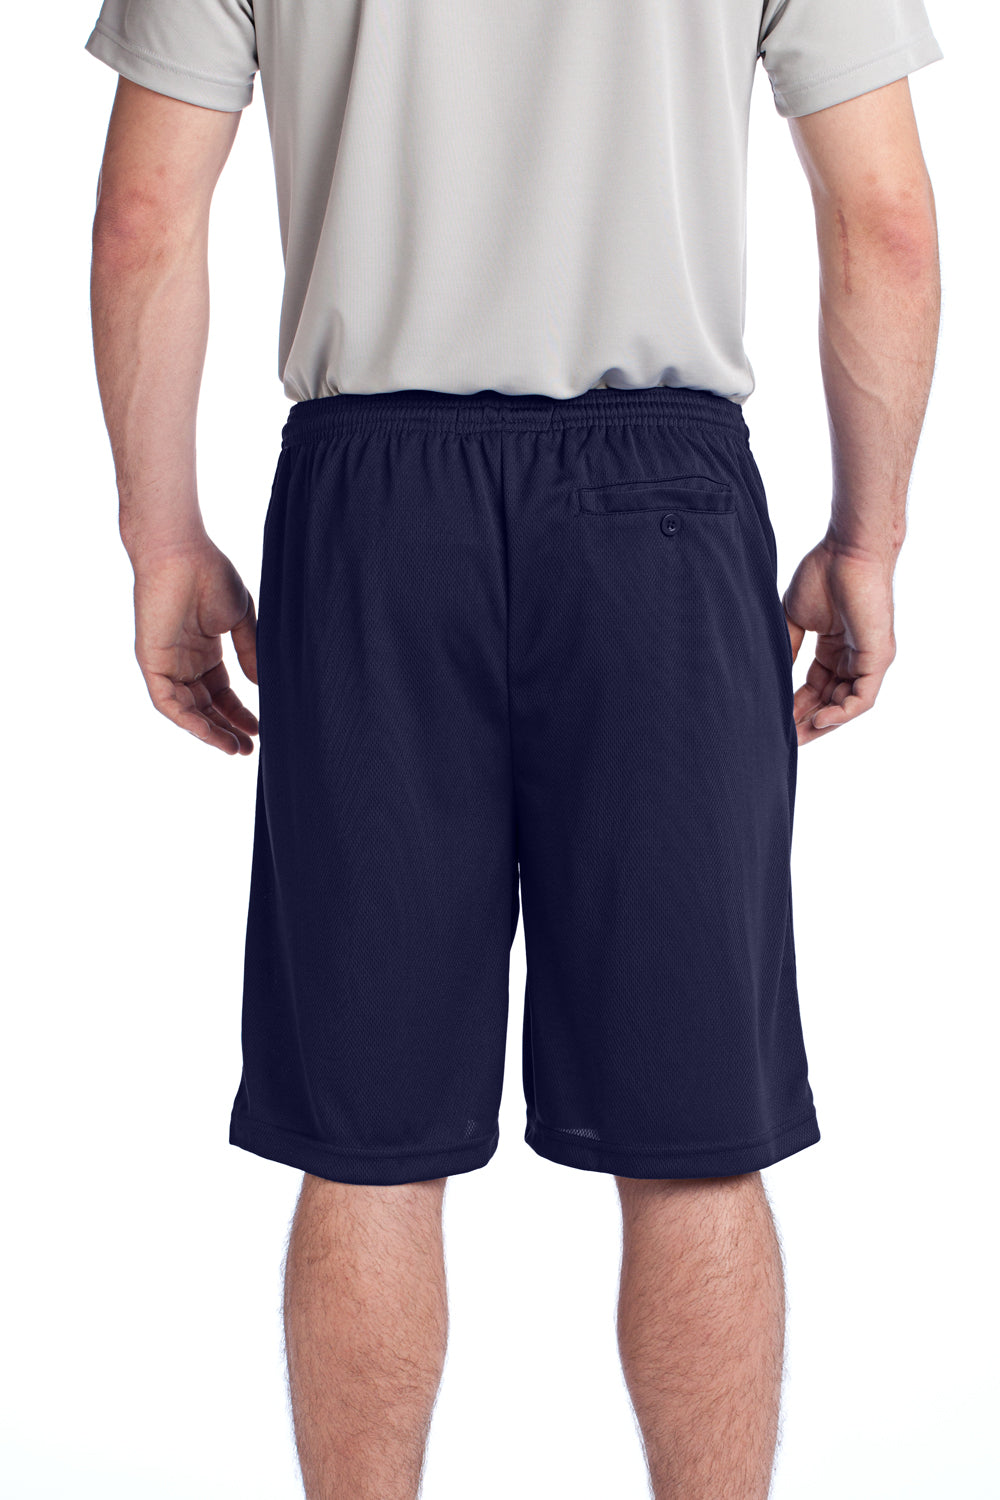 Sport-Tek ST312 PosiCharge Tough Mesh Shorts w/ Pockets True Navy Blue Back